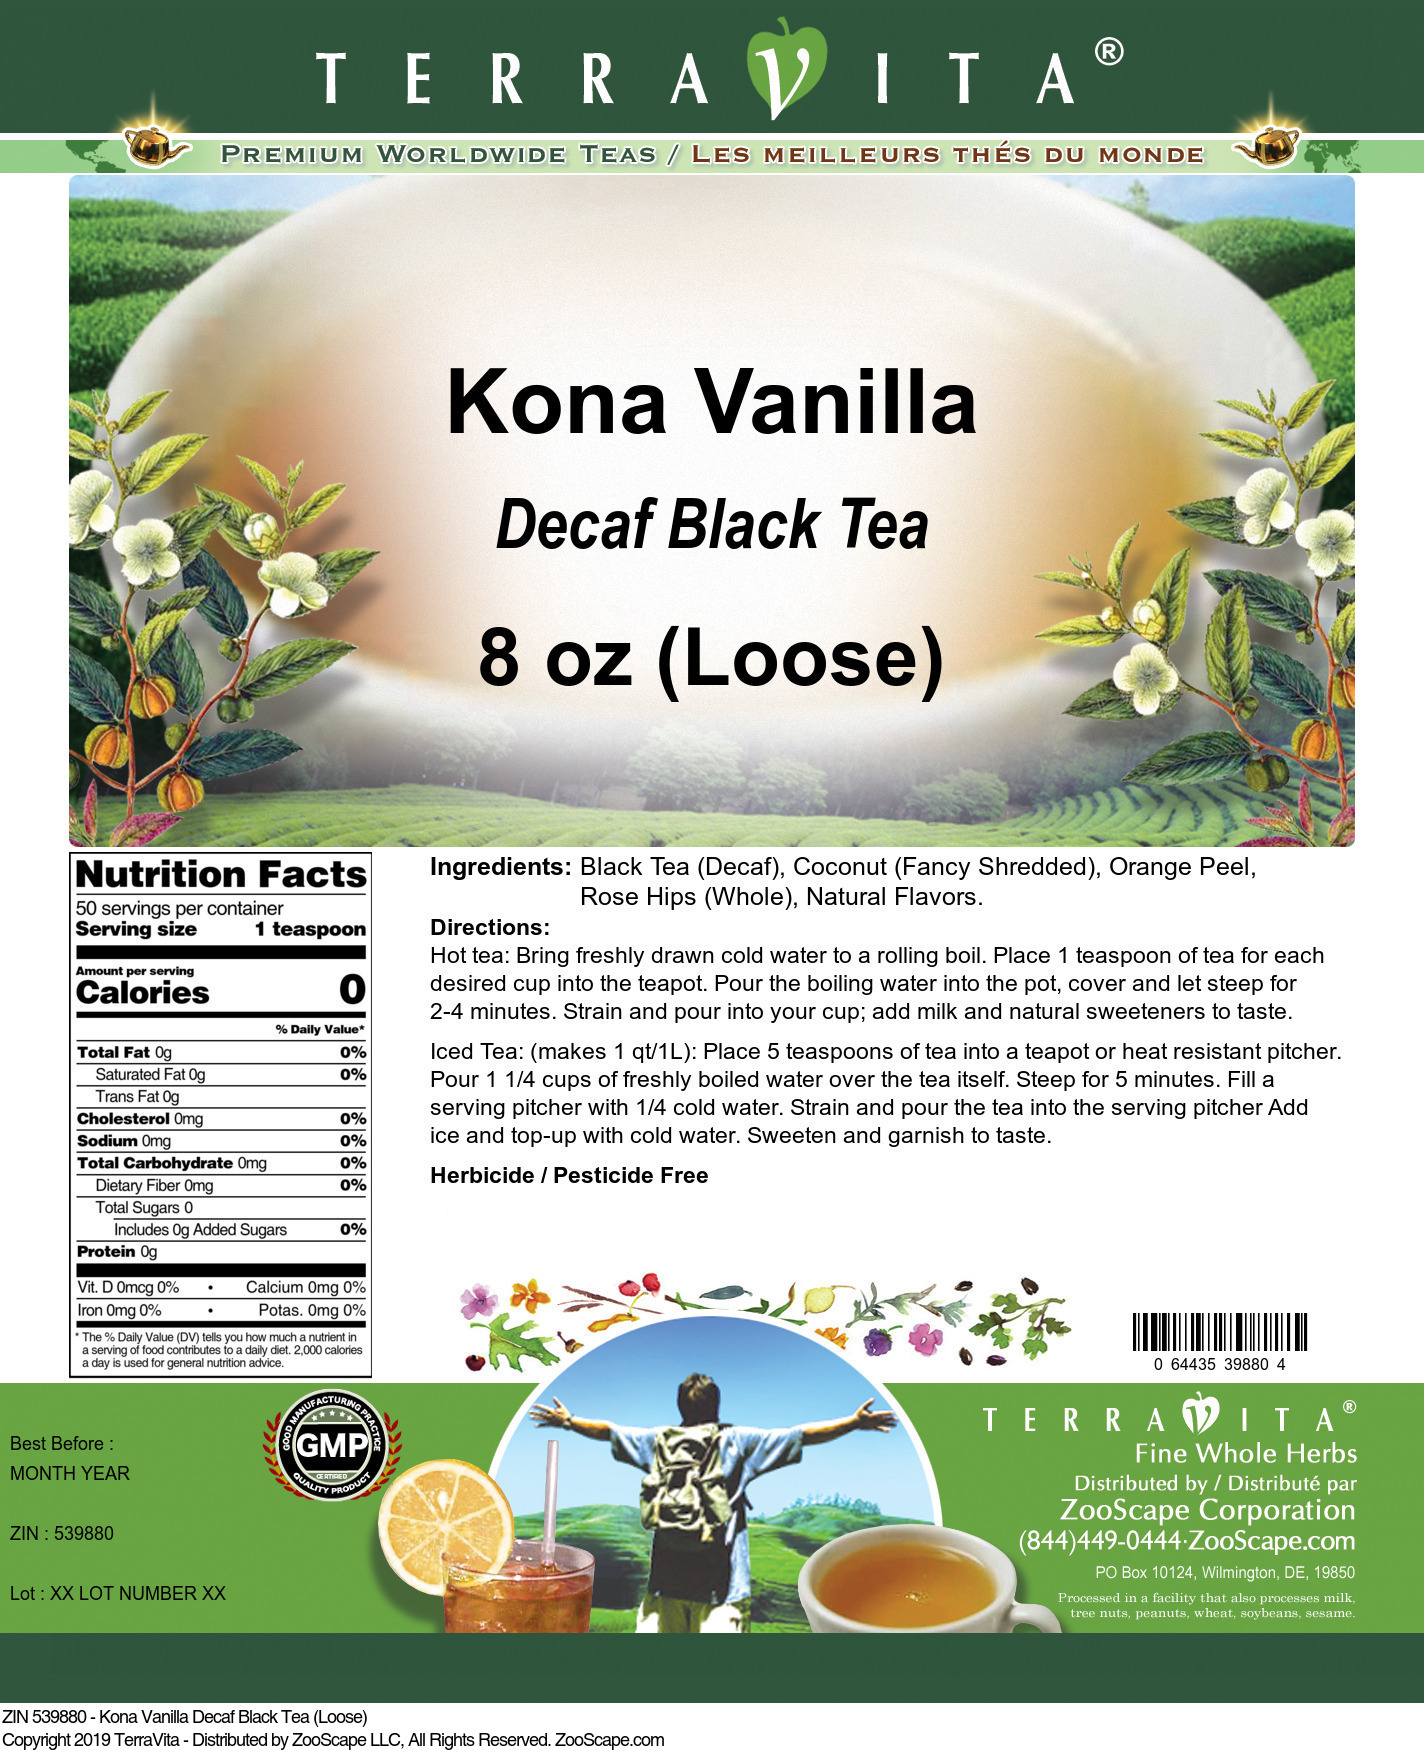 Kona Vanilla Decaf Black Tea (Loose) - Label